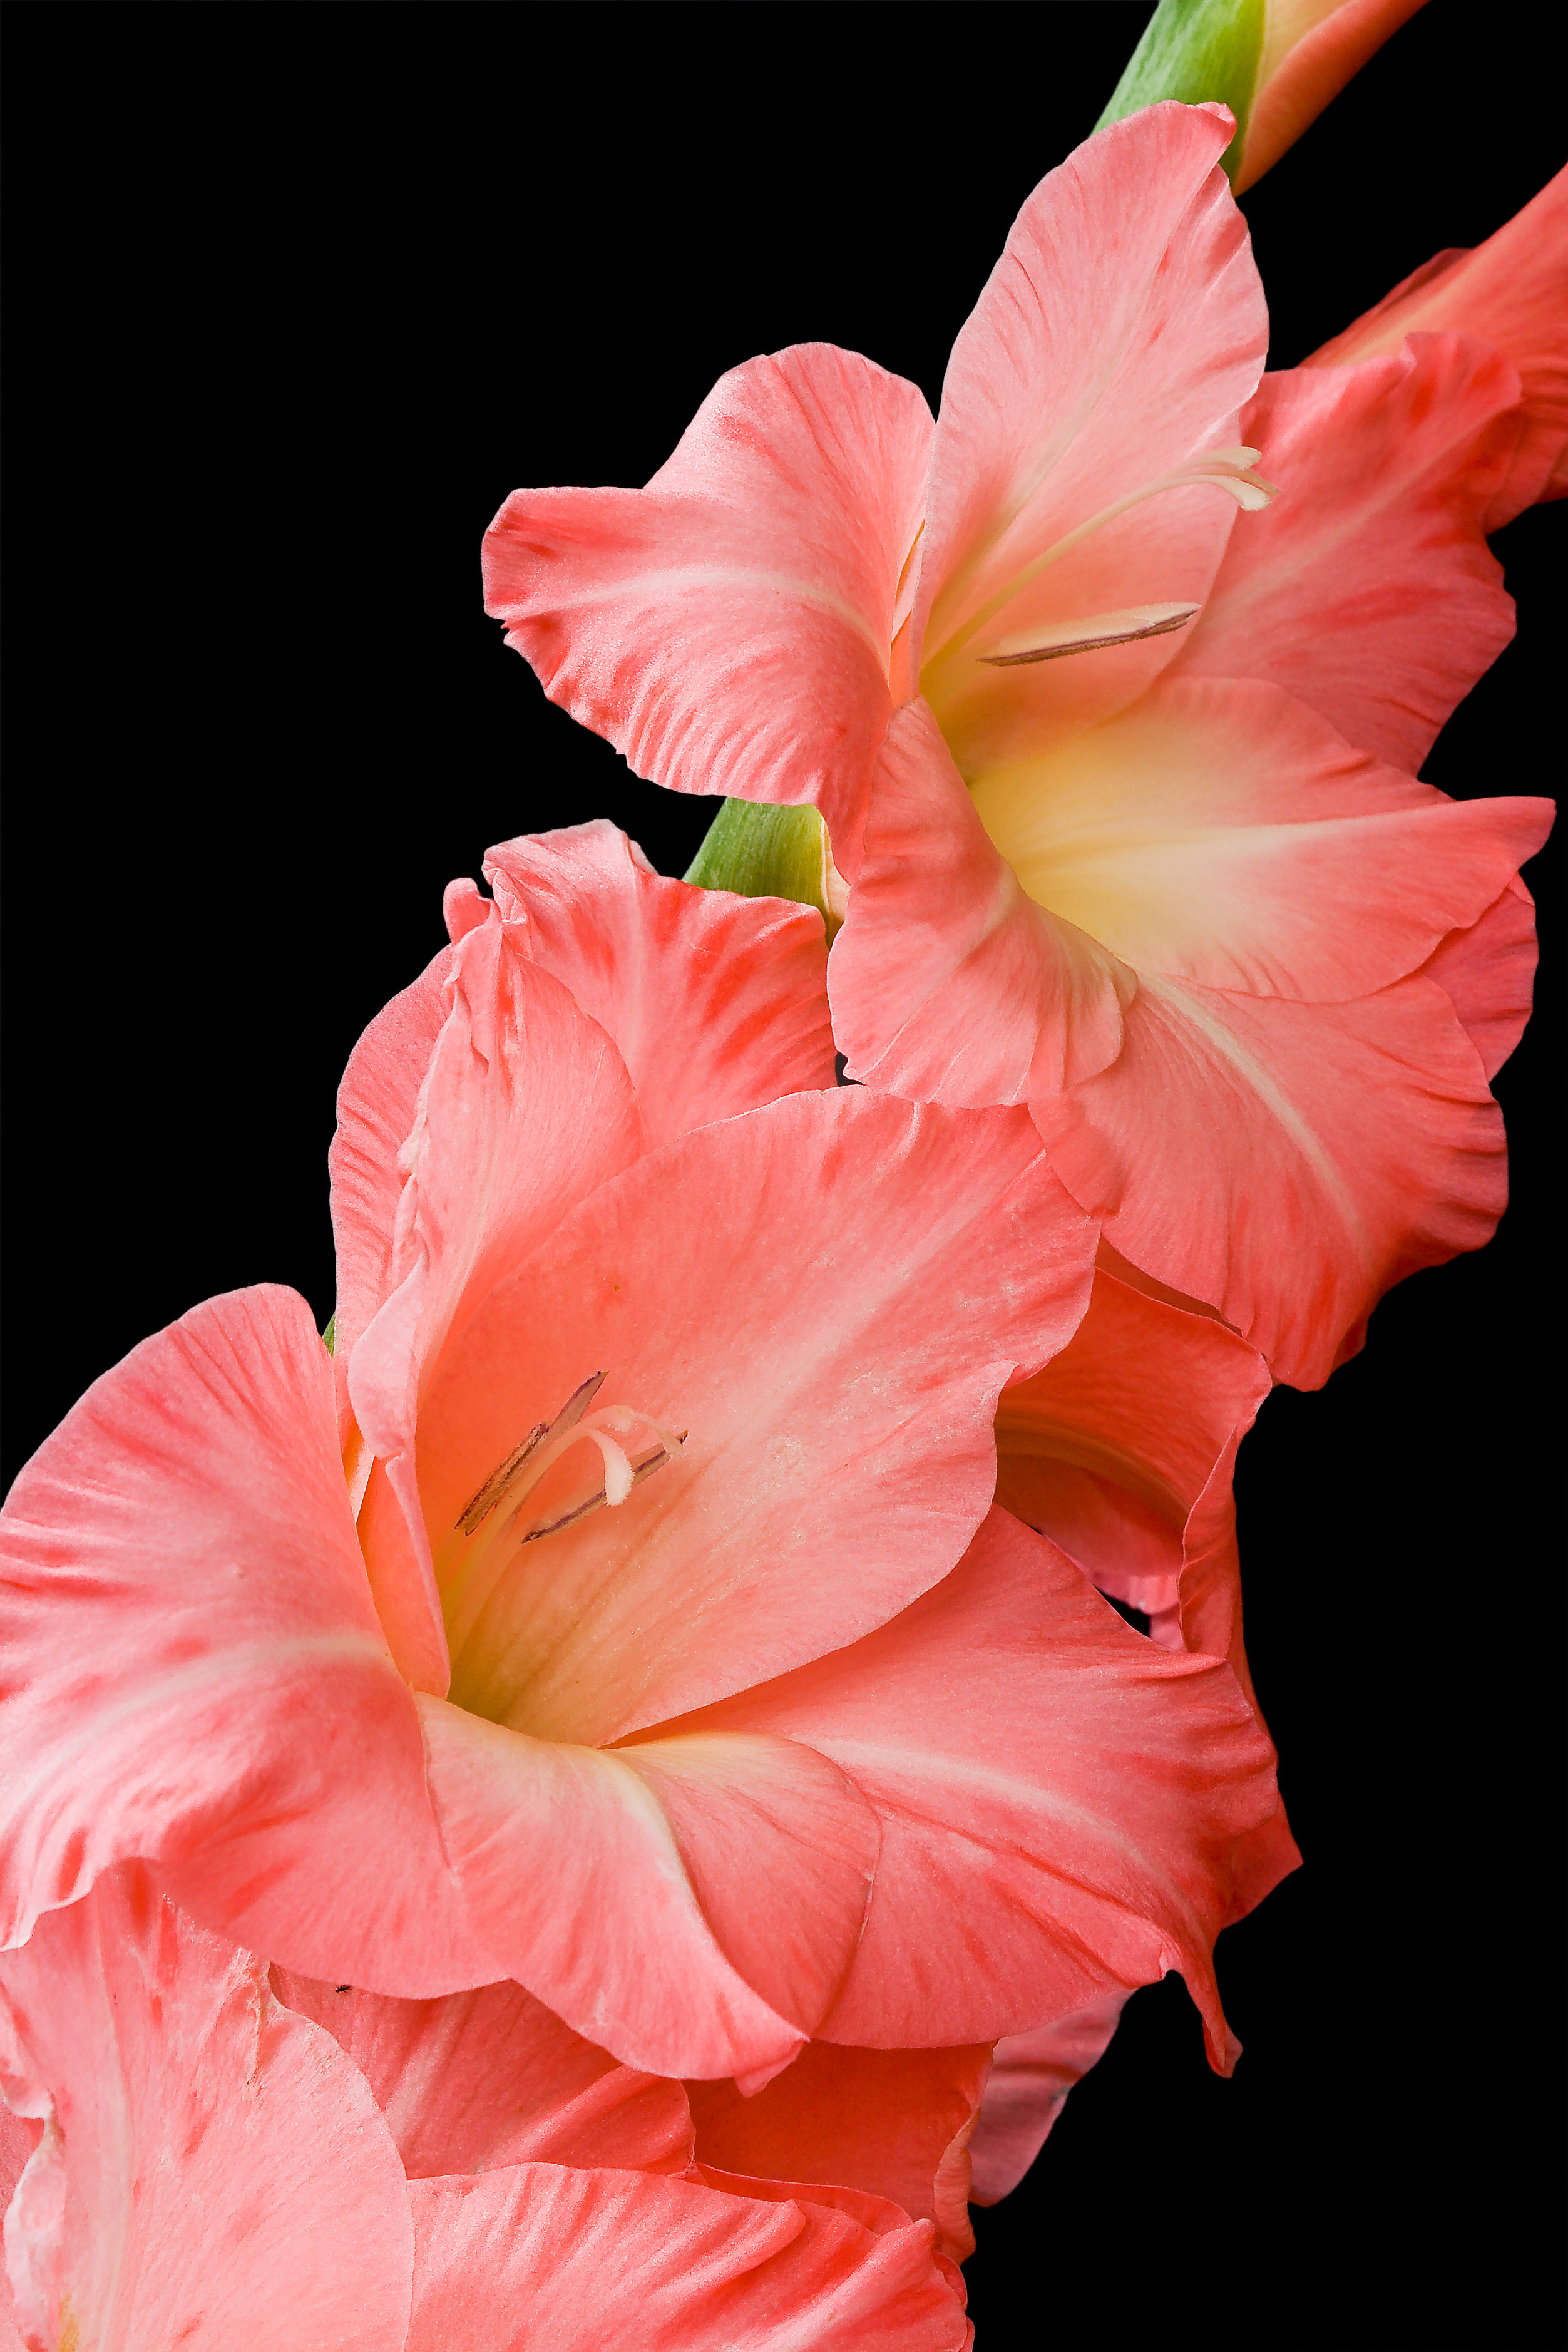 File:Pink Gladiolus.jpg - Wikimedia Commons